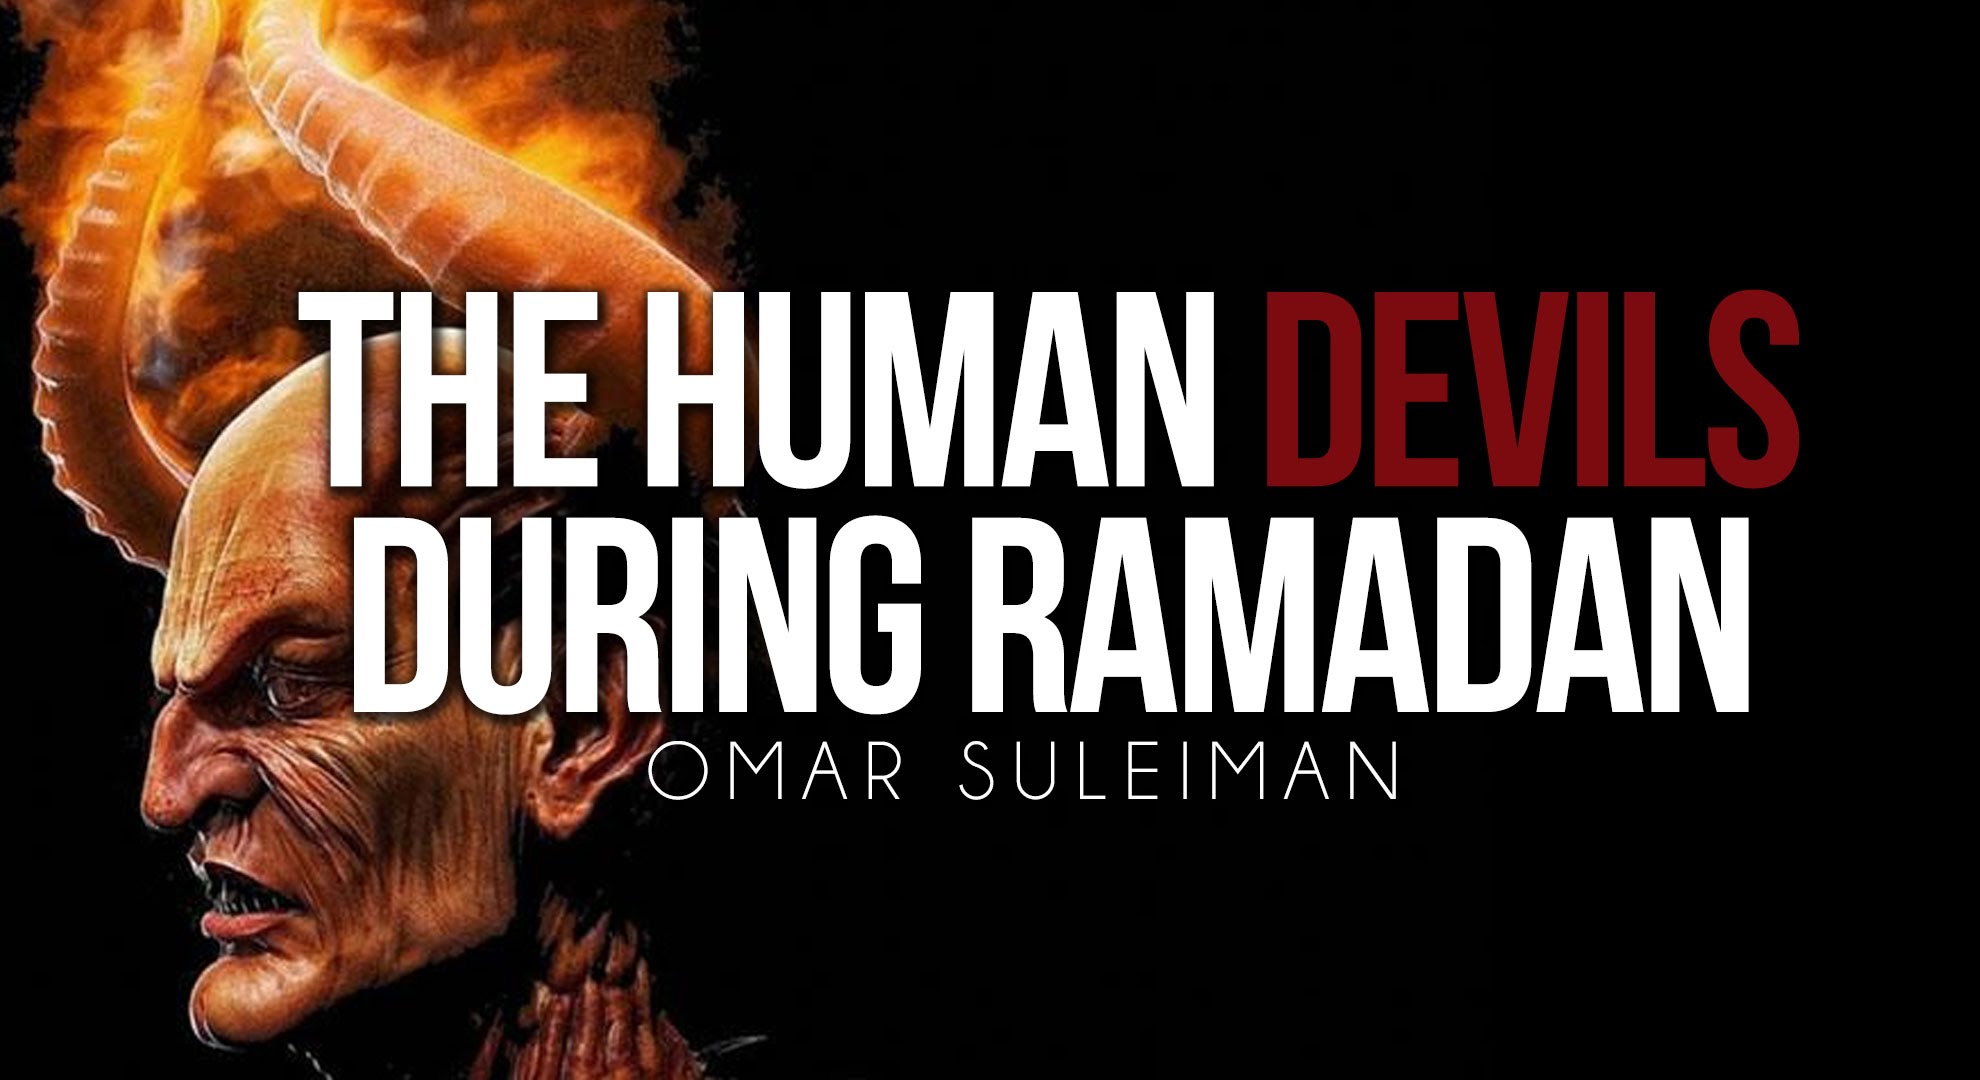 The Human Devils During Ramadan - Omar Suleiman